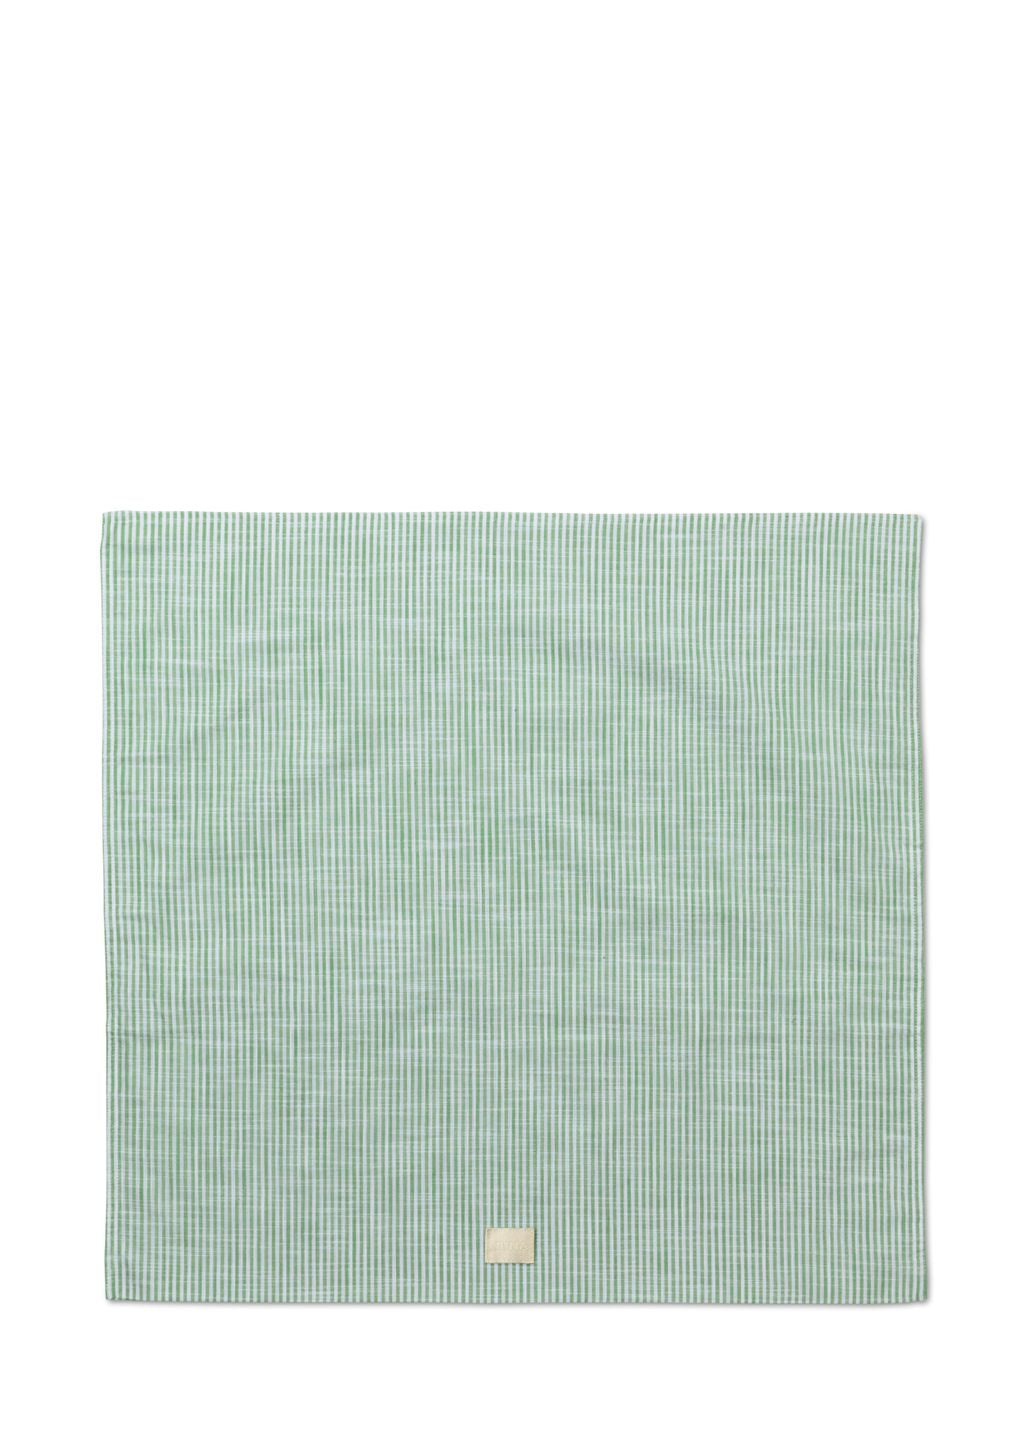 Juna monokrom linjer kudde täcker 63 x60 cm, grönt/vitt